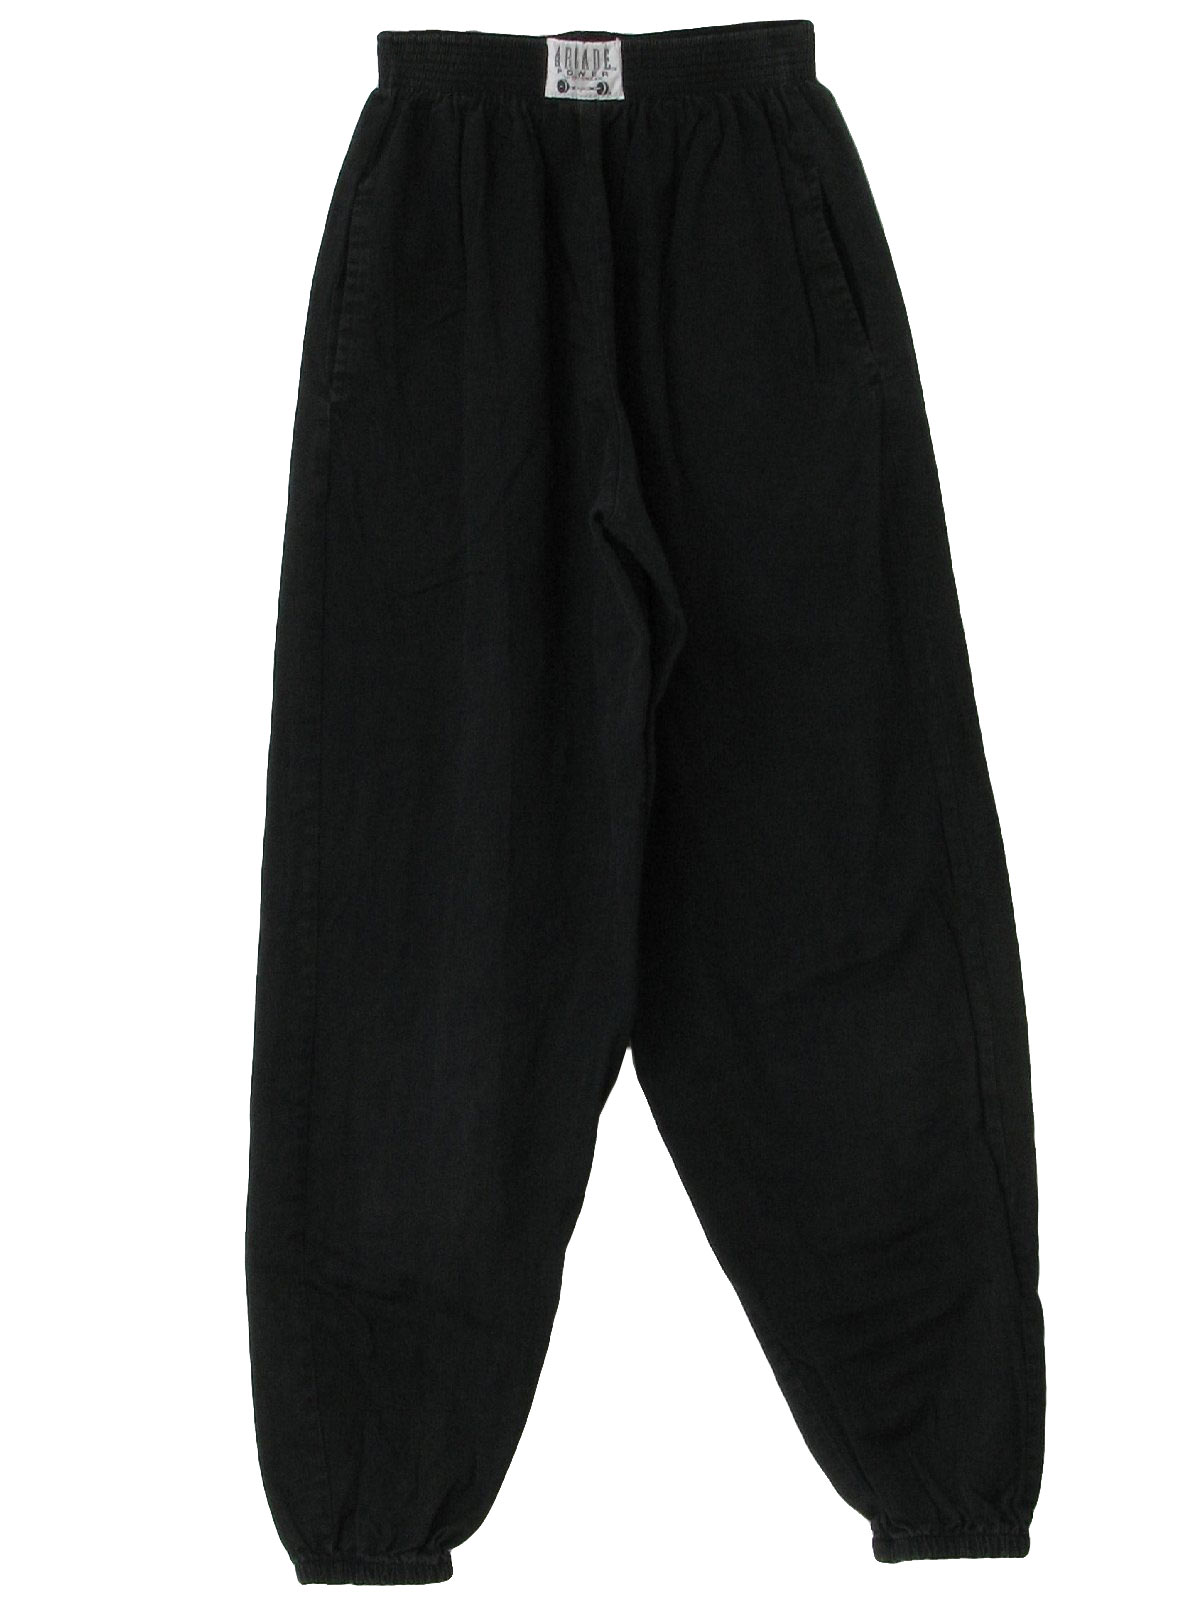 1980s Harem Pants  80s Baggy Black Dress Pants  Hig  Gem